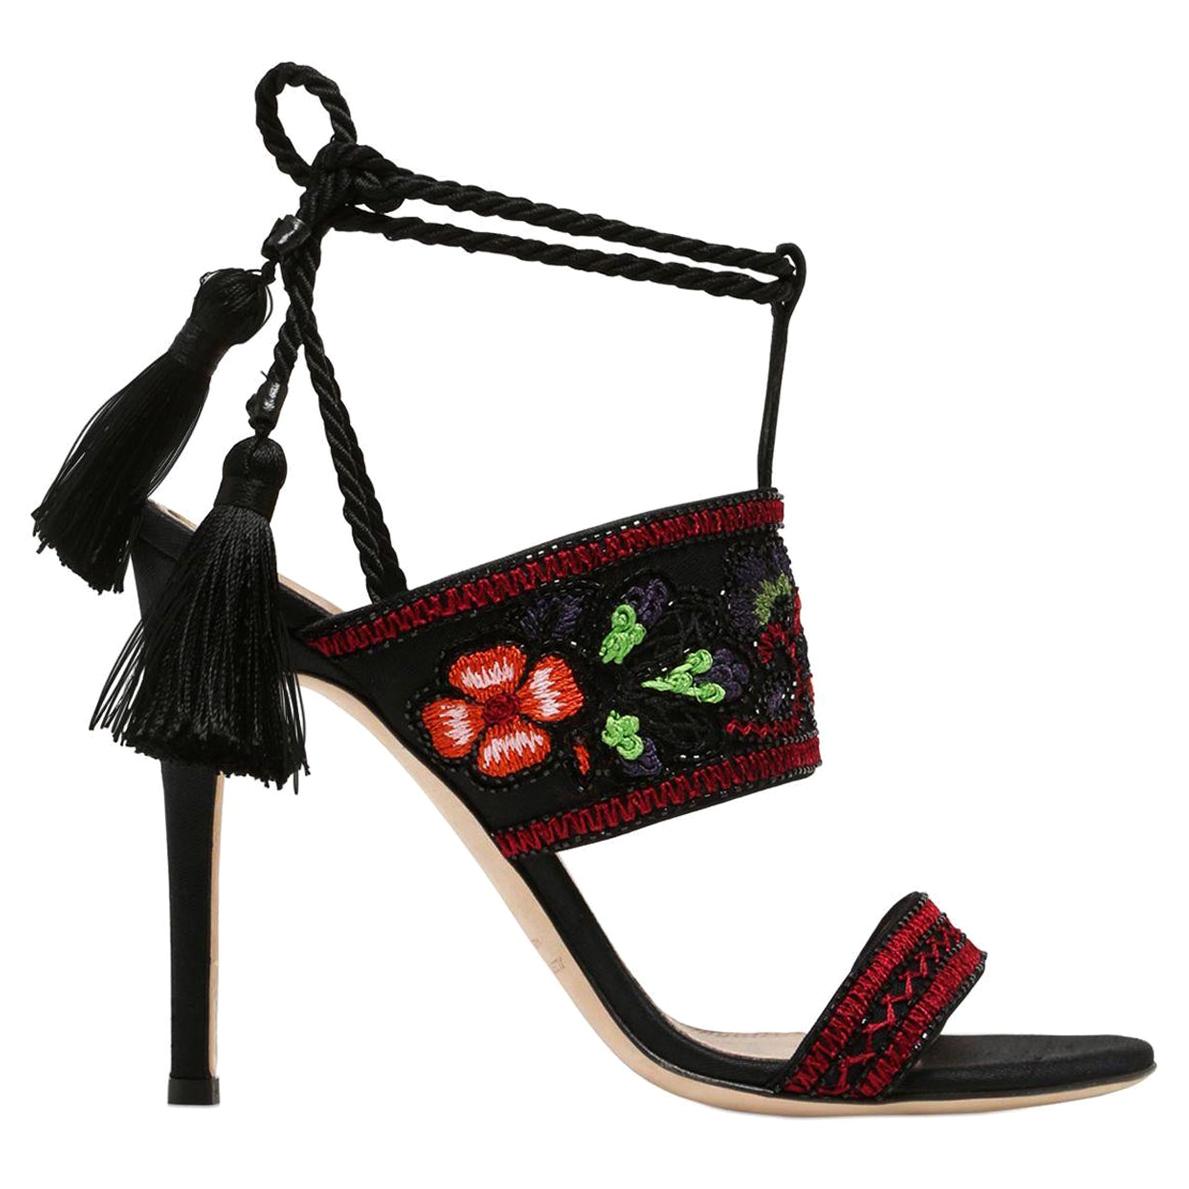 New Alberta Ferretti Beaded and Embroidered Satin Stiletto Heel Sandals 39  US 9